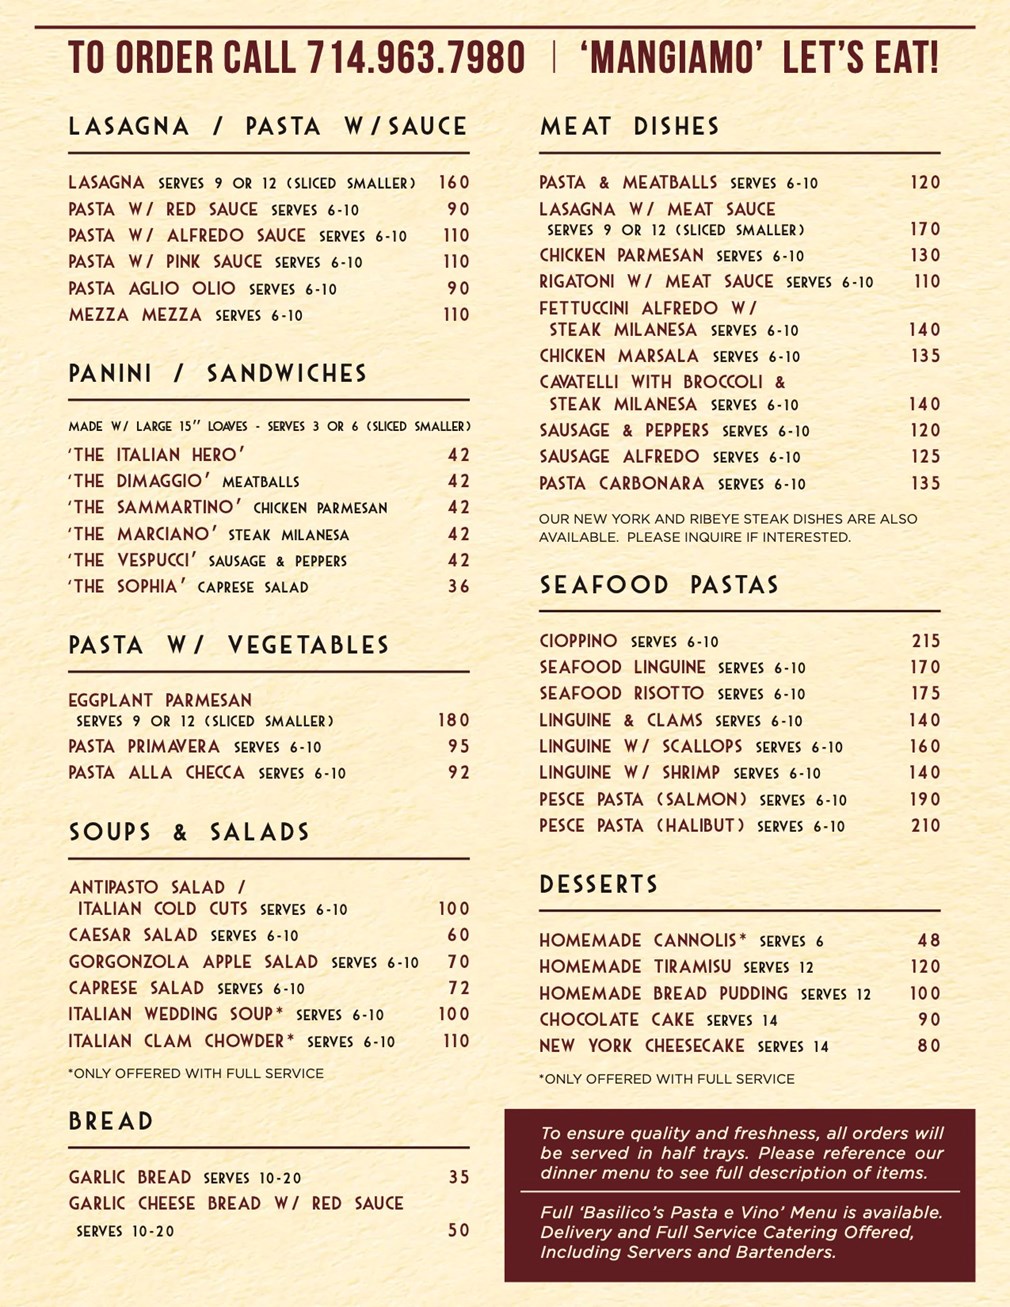 catering menu items